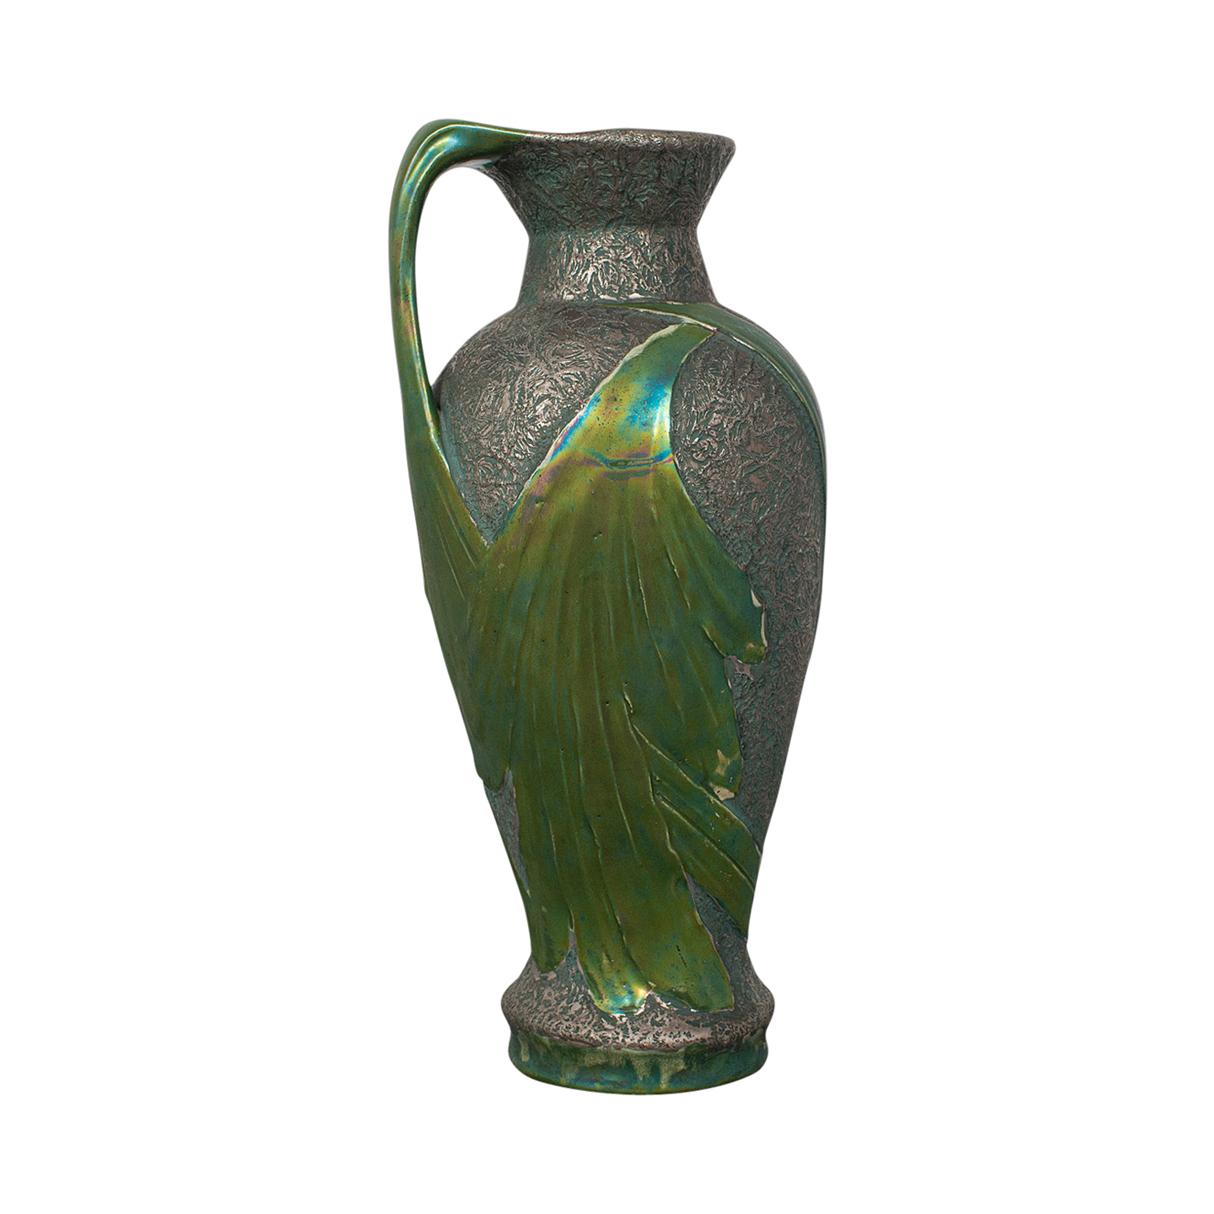 Antique Serving Ewer, Austrian, Ceramic, Amphora, Jug, Art Nouveau, circa 1900